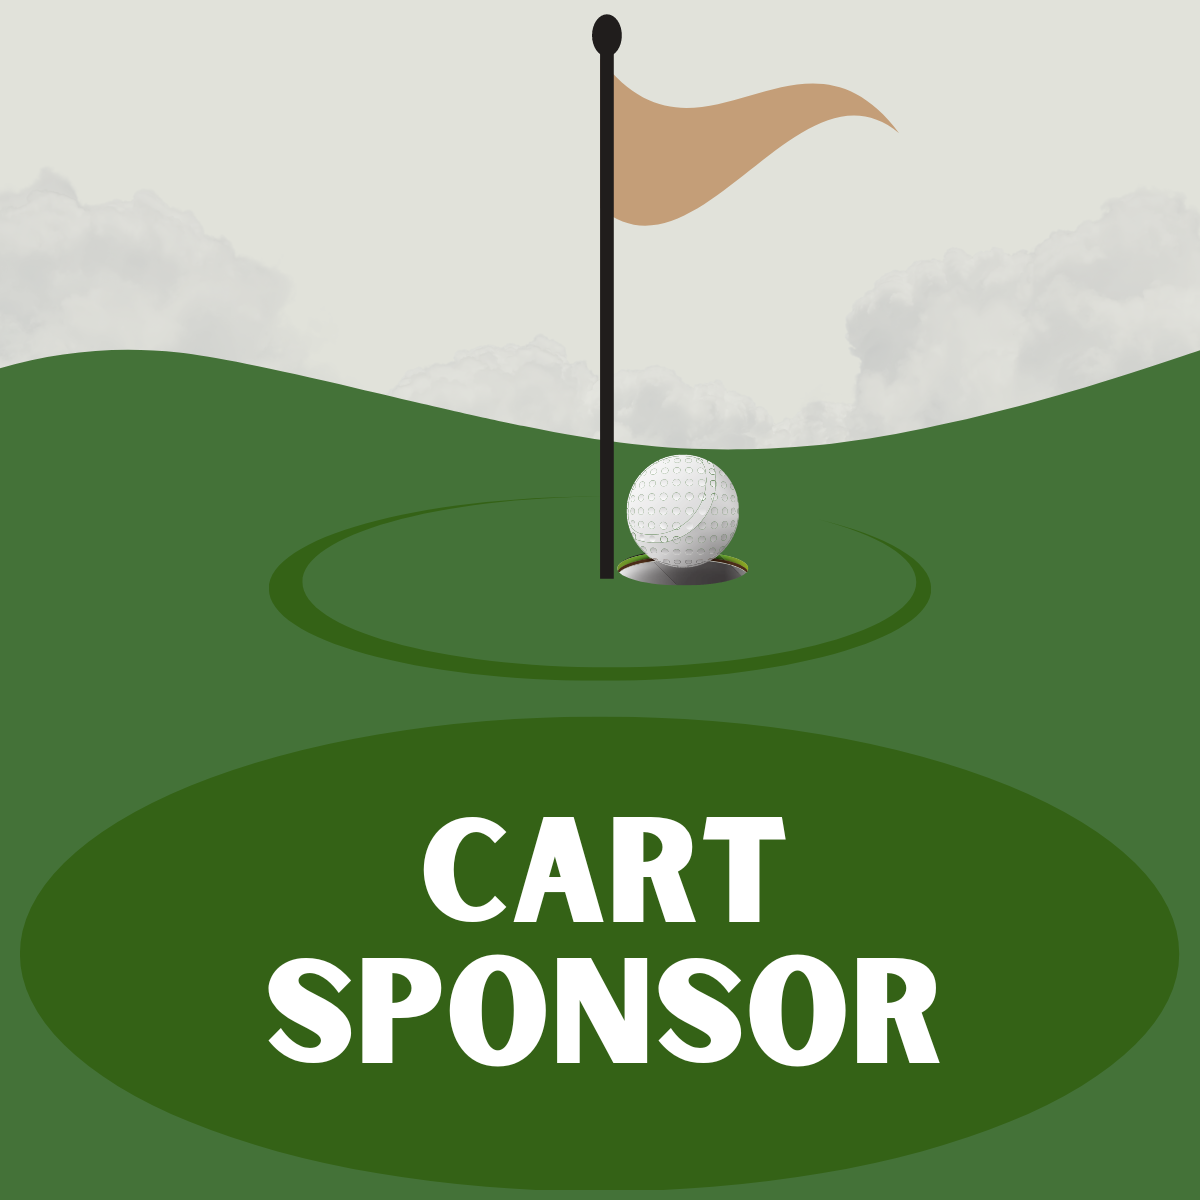 Cart Sponsor - New Mexico Open